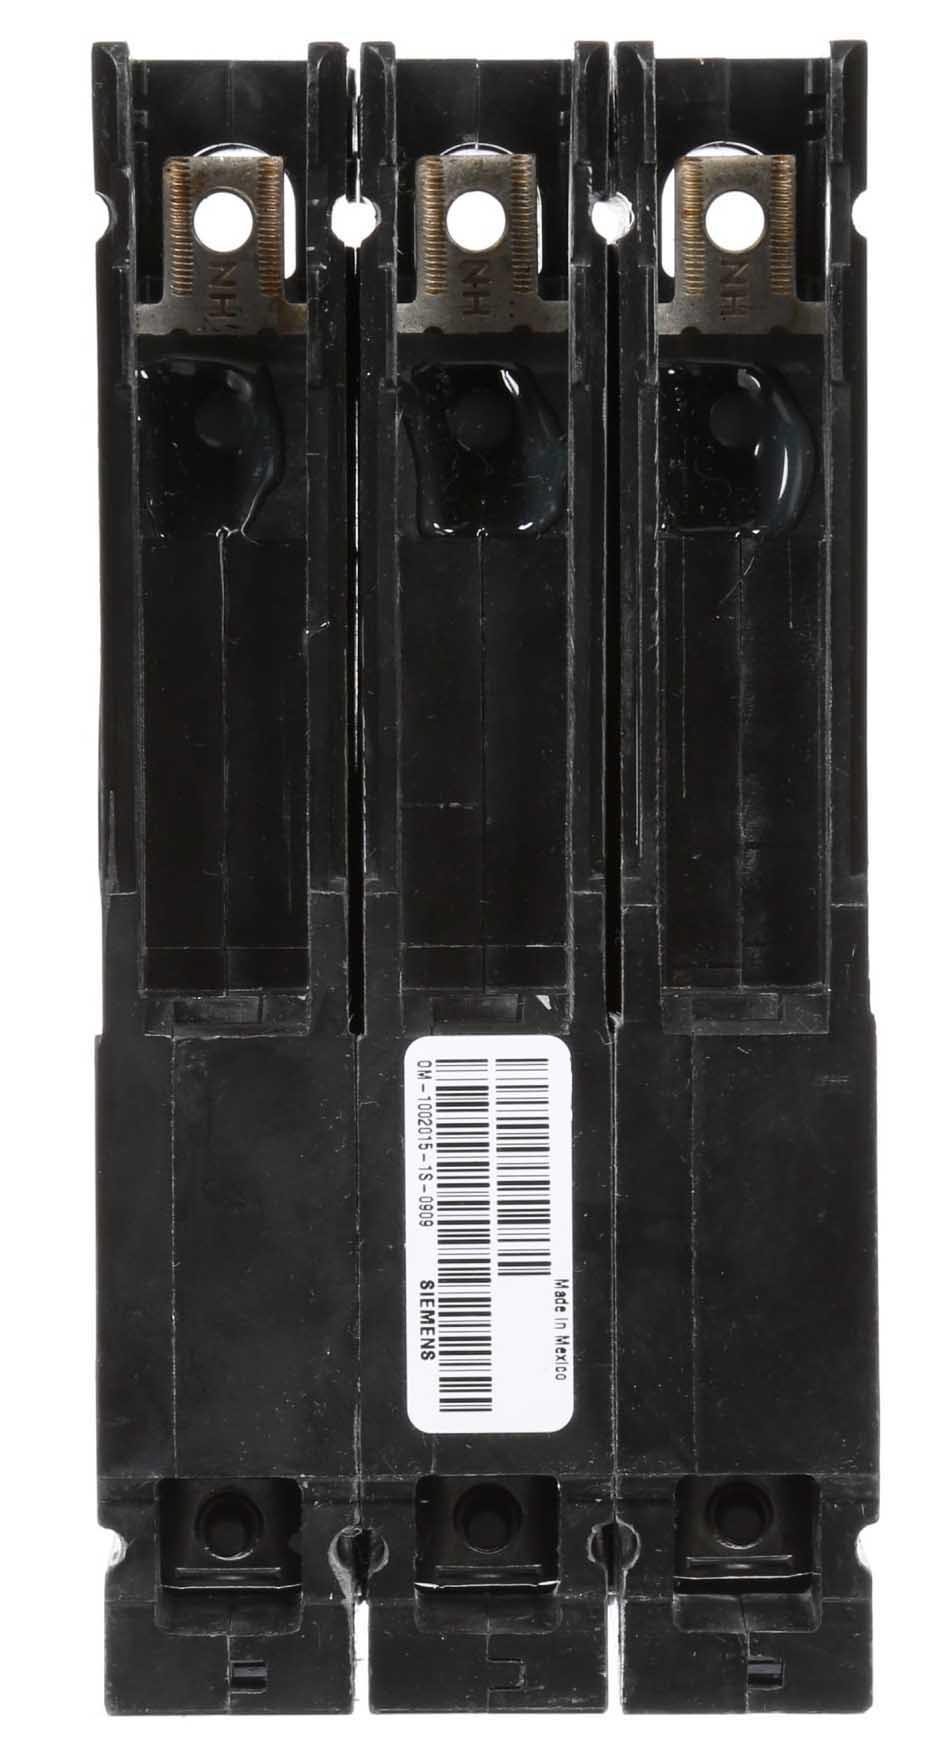 ED23B070 - Siemens - Molded Case Circuit Breaker